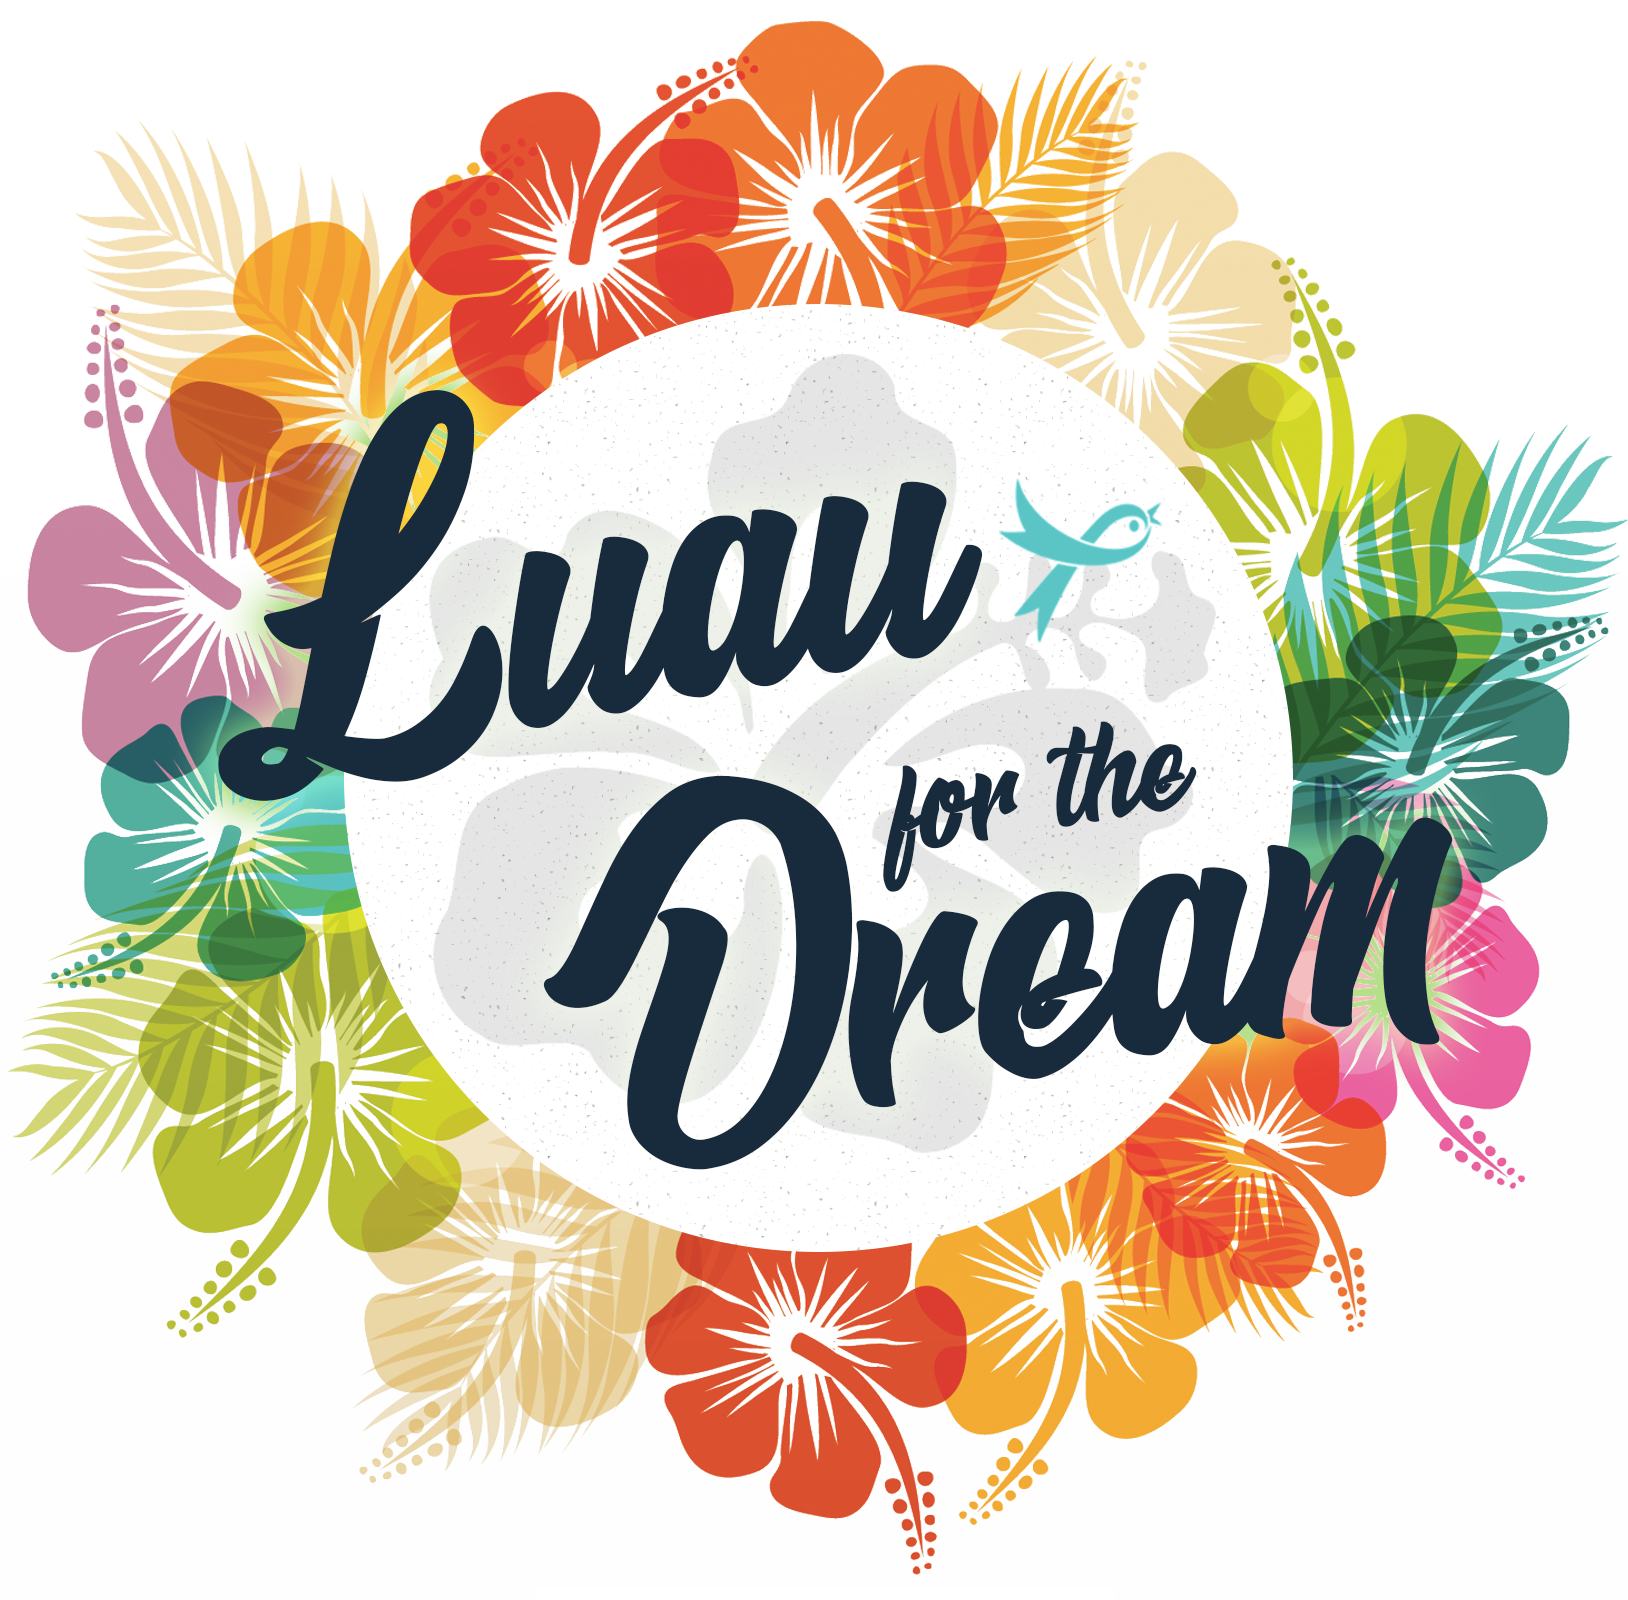 The logo for luau for the dream.